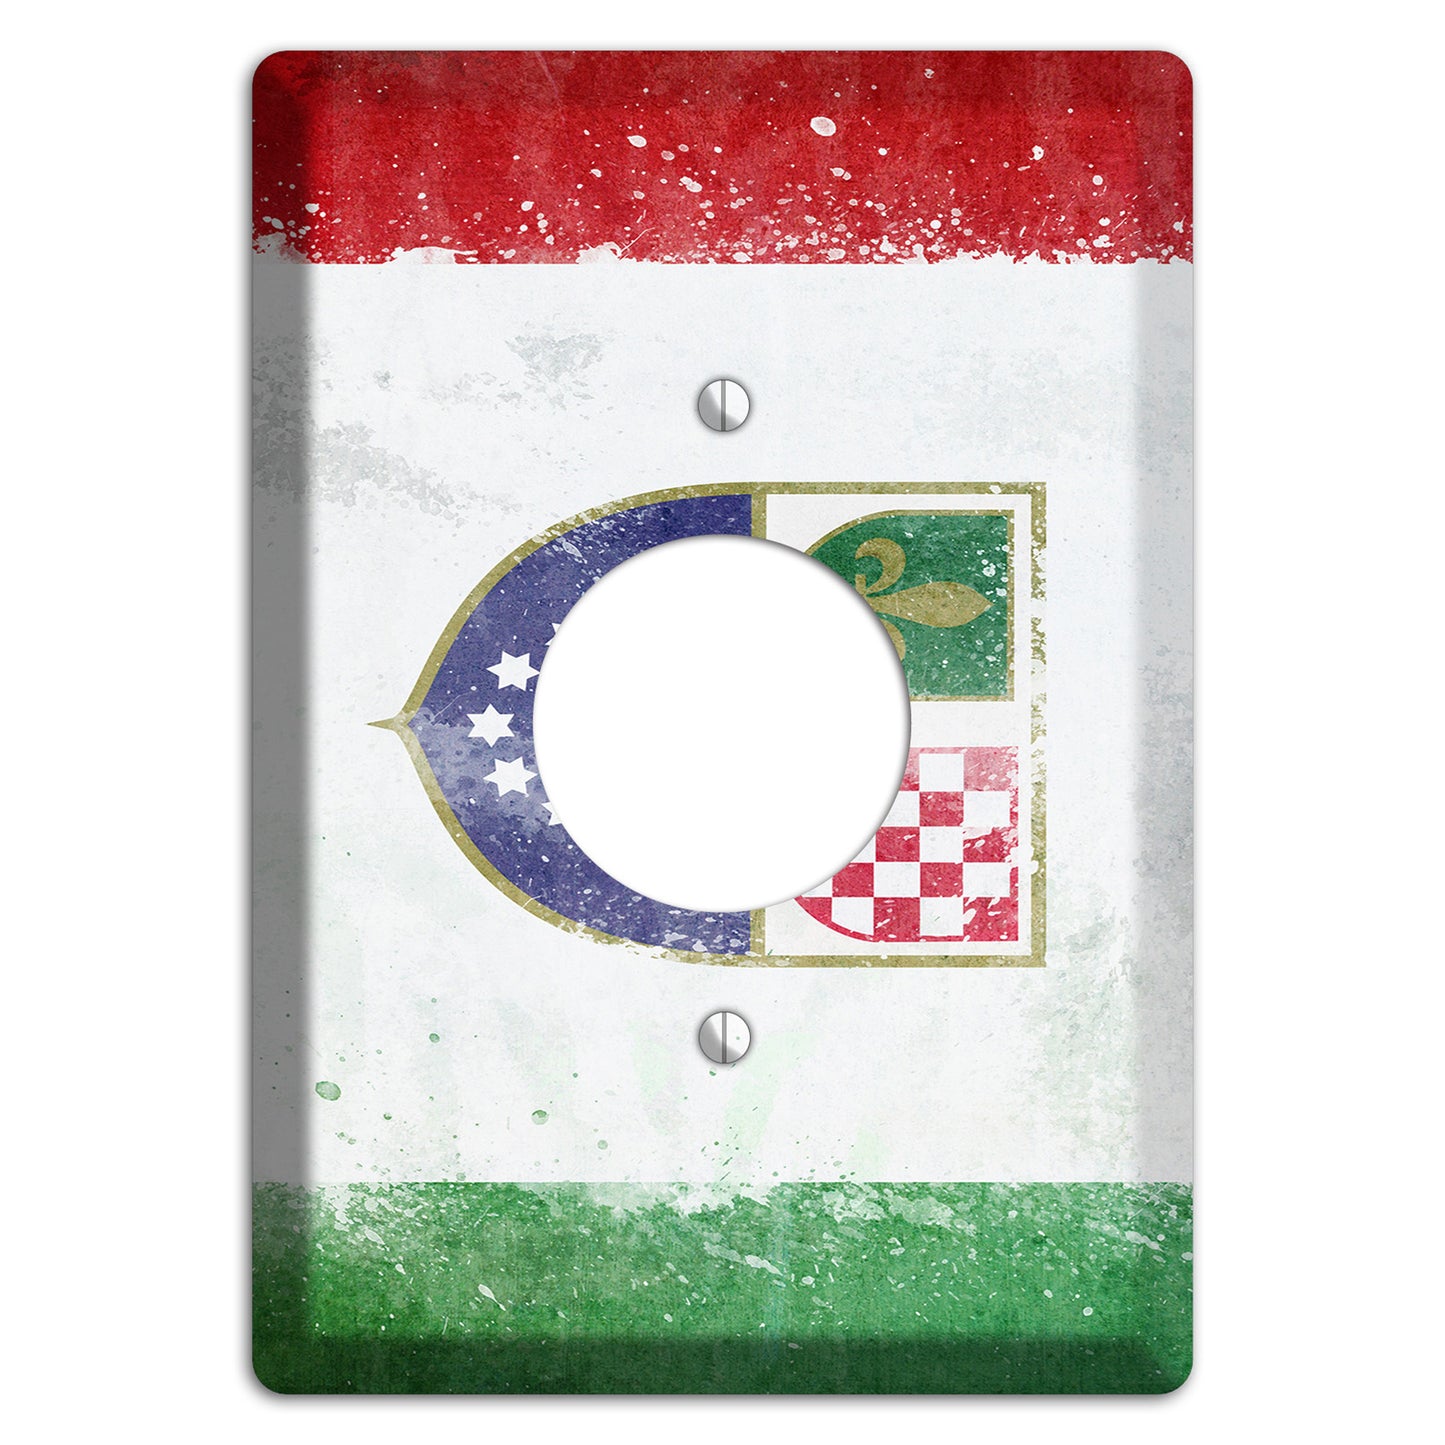 Bosnia and Herzegovina Federation of Cover Plates Single Receptacle Wallplate